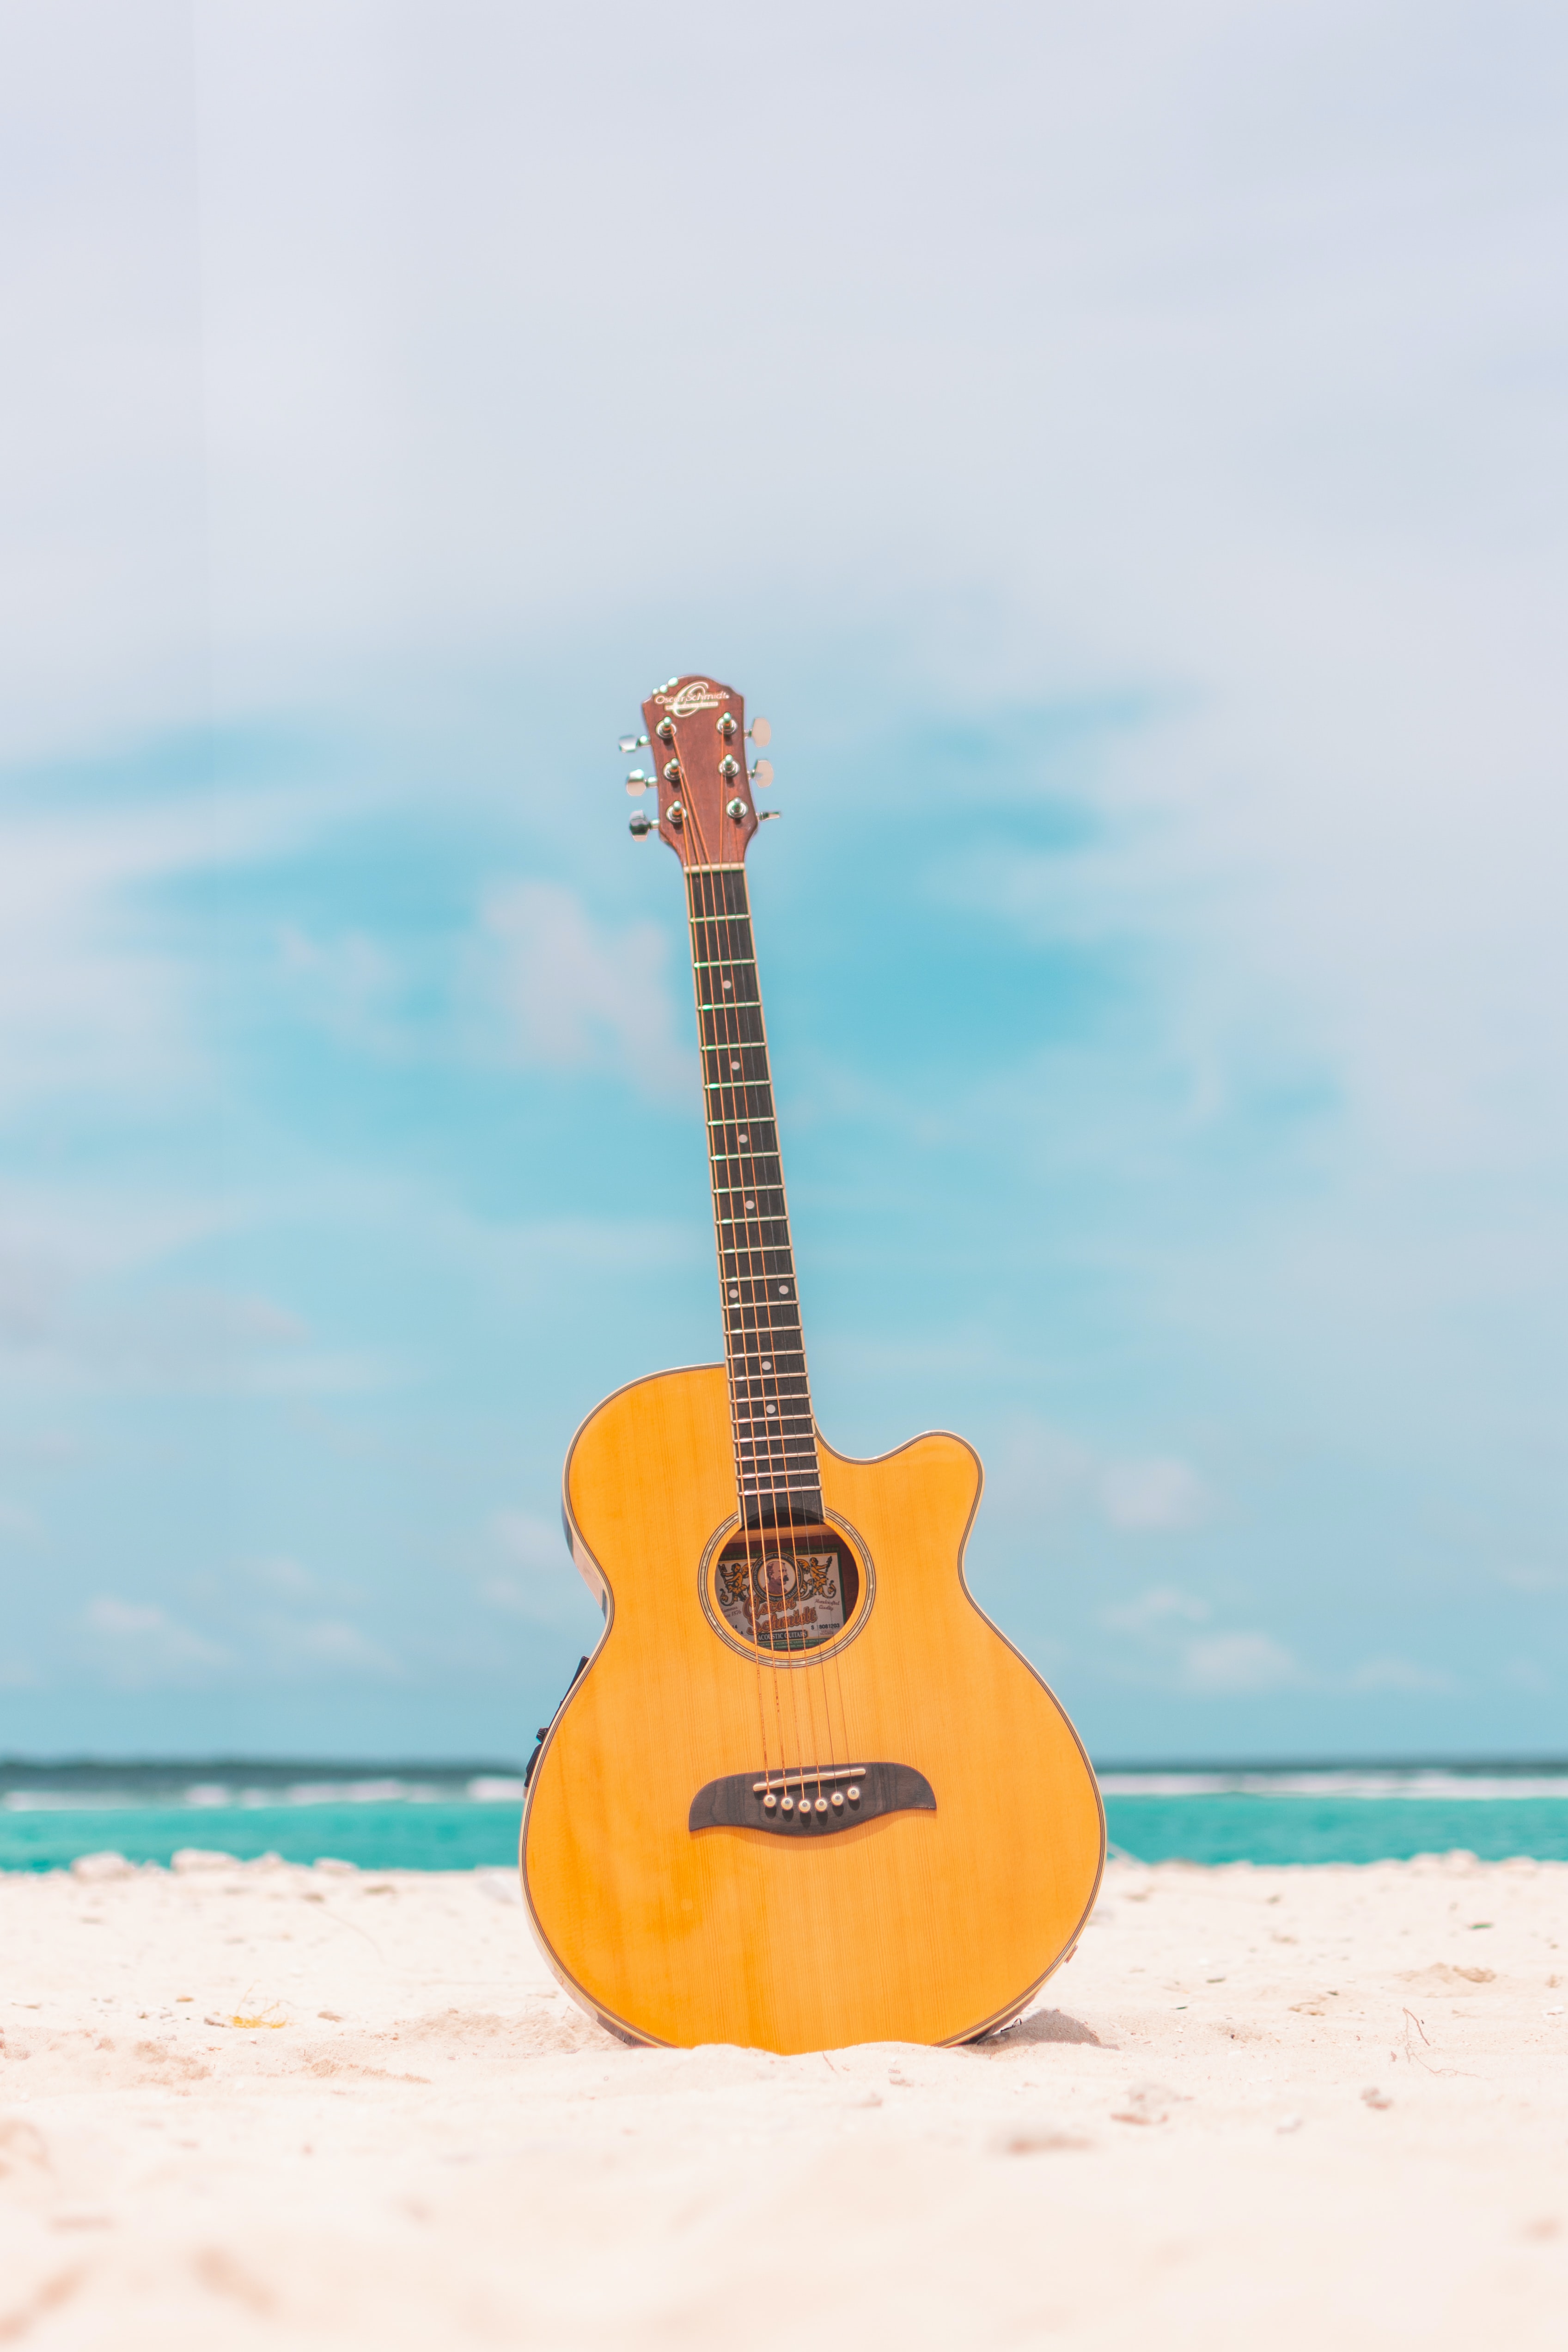 Smartphone Background guitar, tool, beach, summer